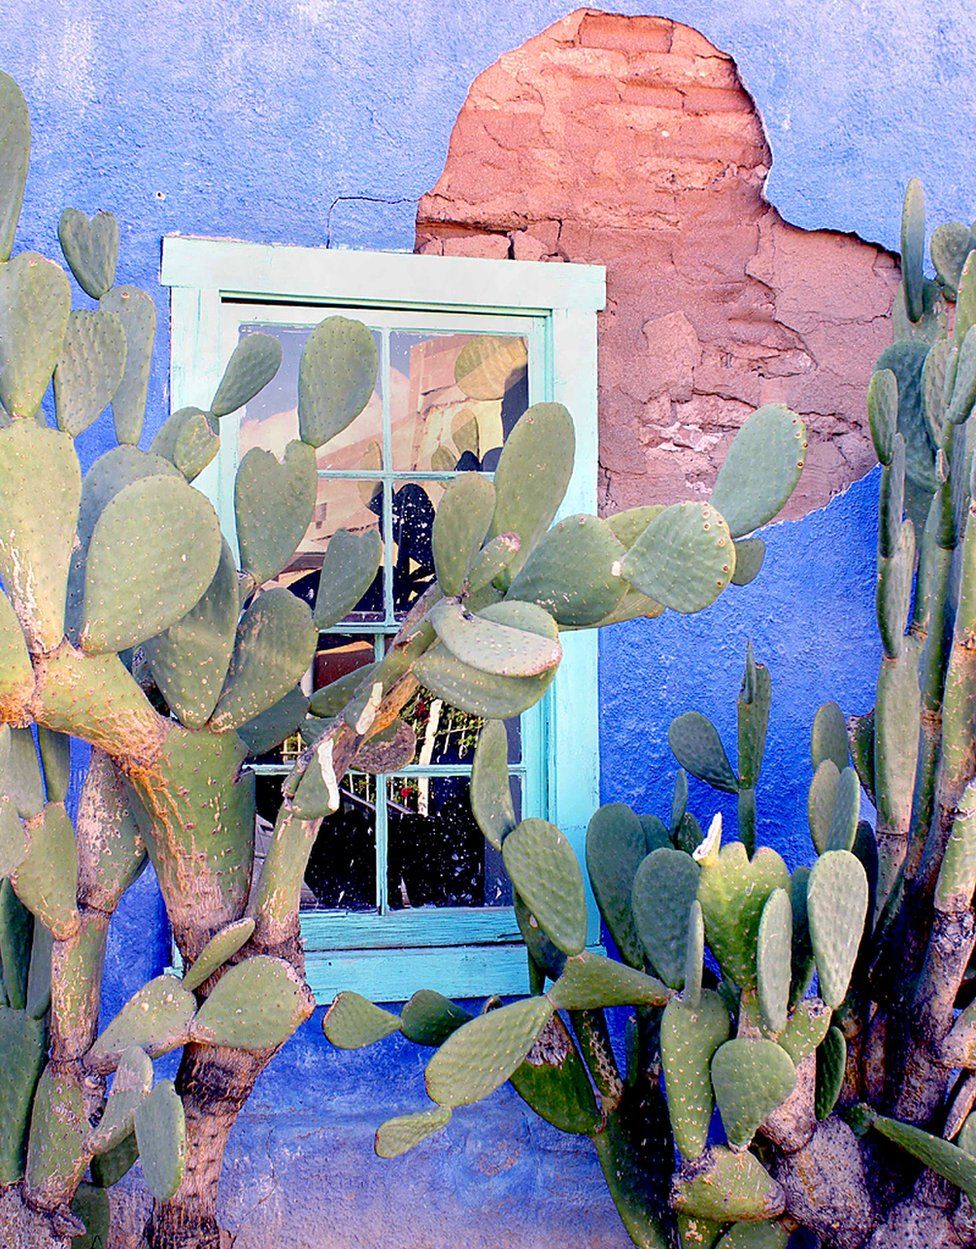 A cactus against a window